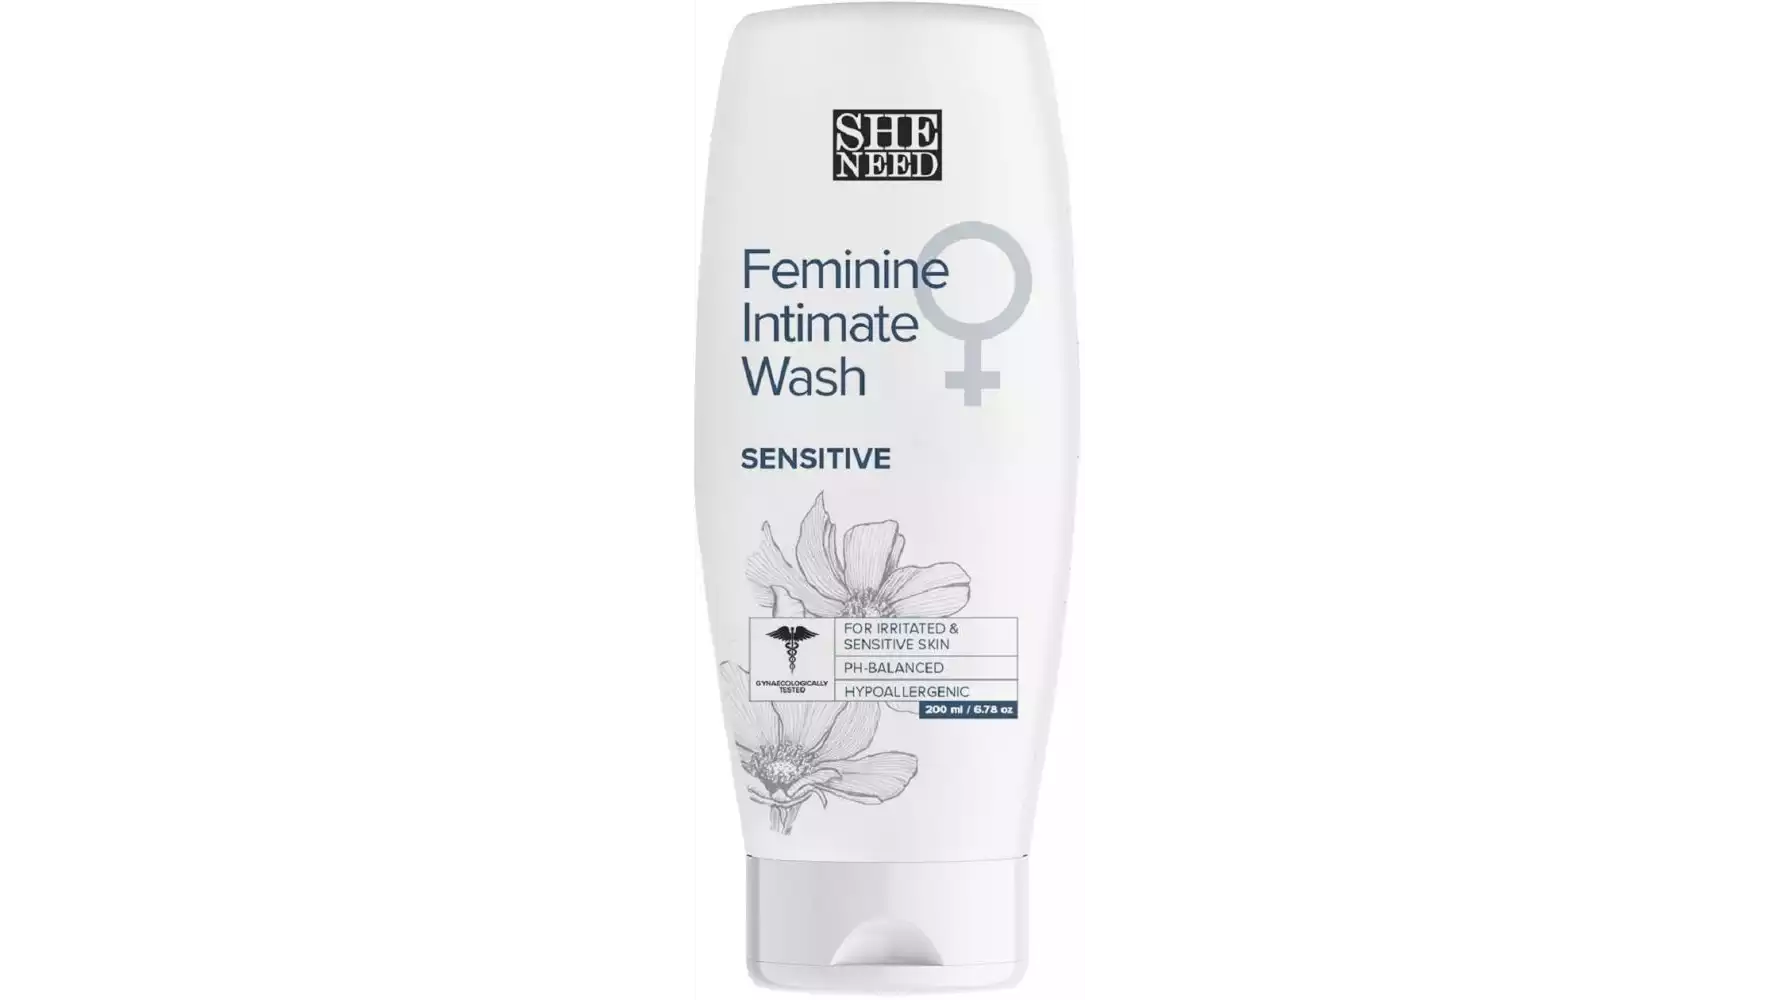 SheNeed Sensitive Feminine Intimate Wash (200ml)